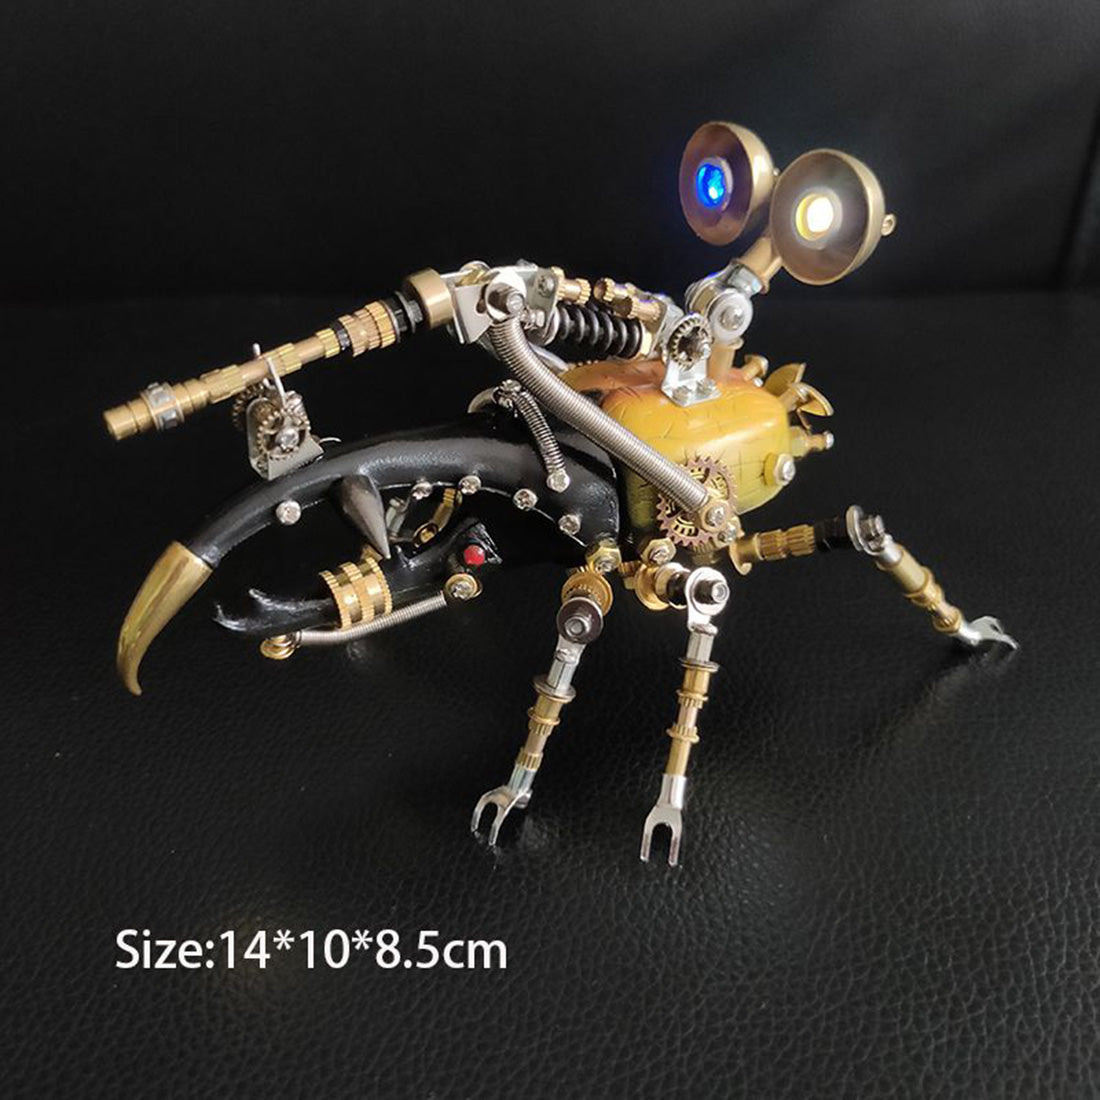 Steampunk Dynastes Rover Metal Model